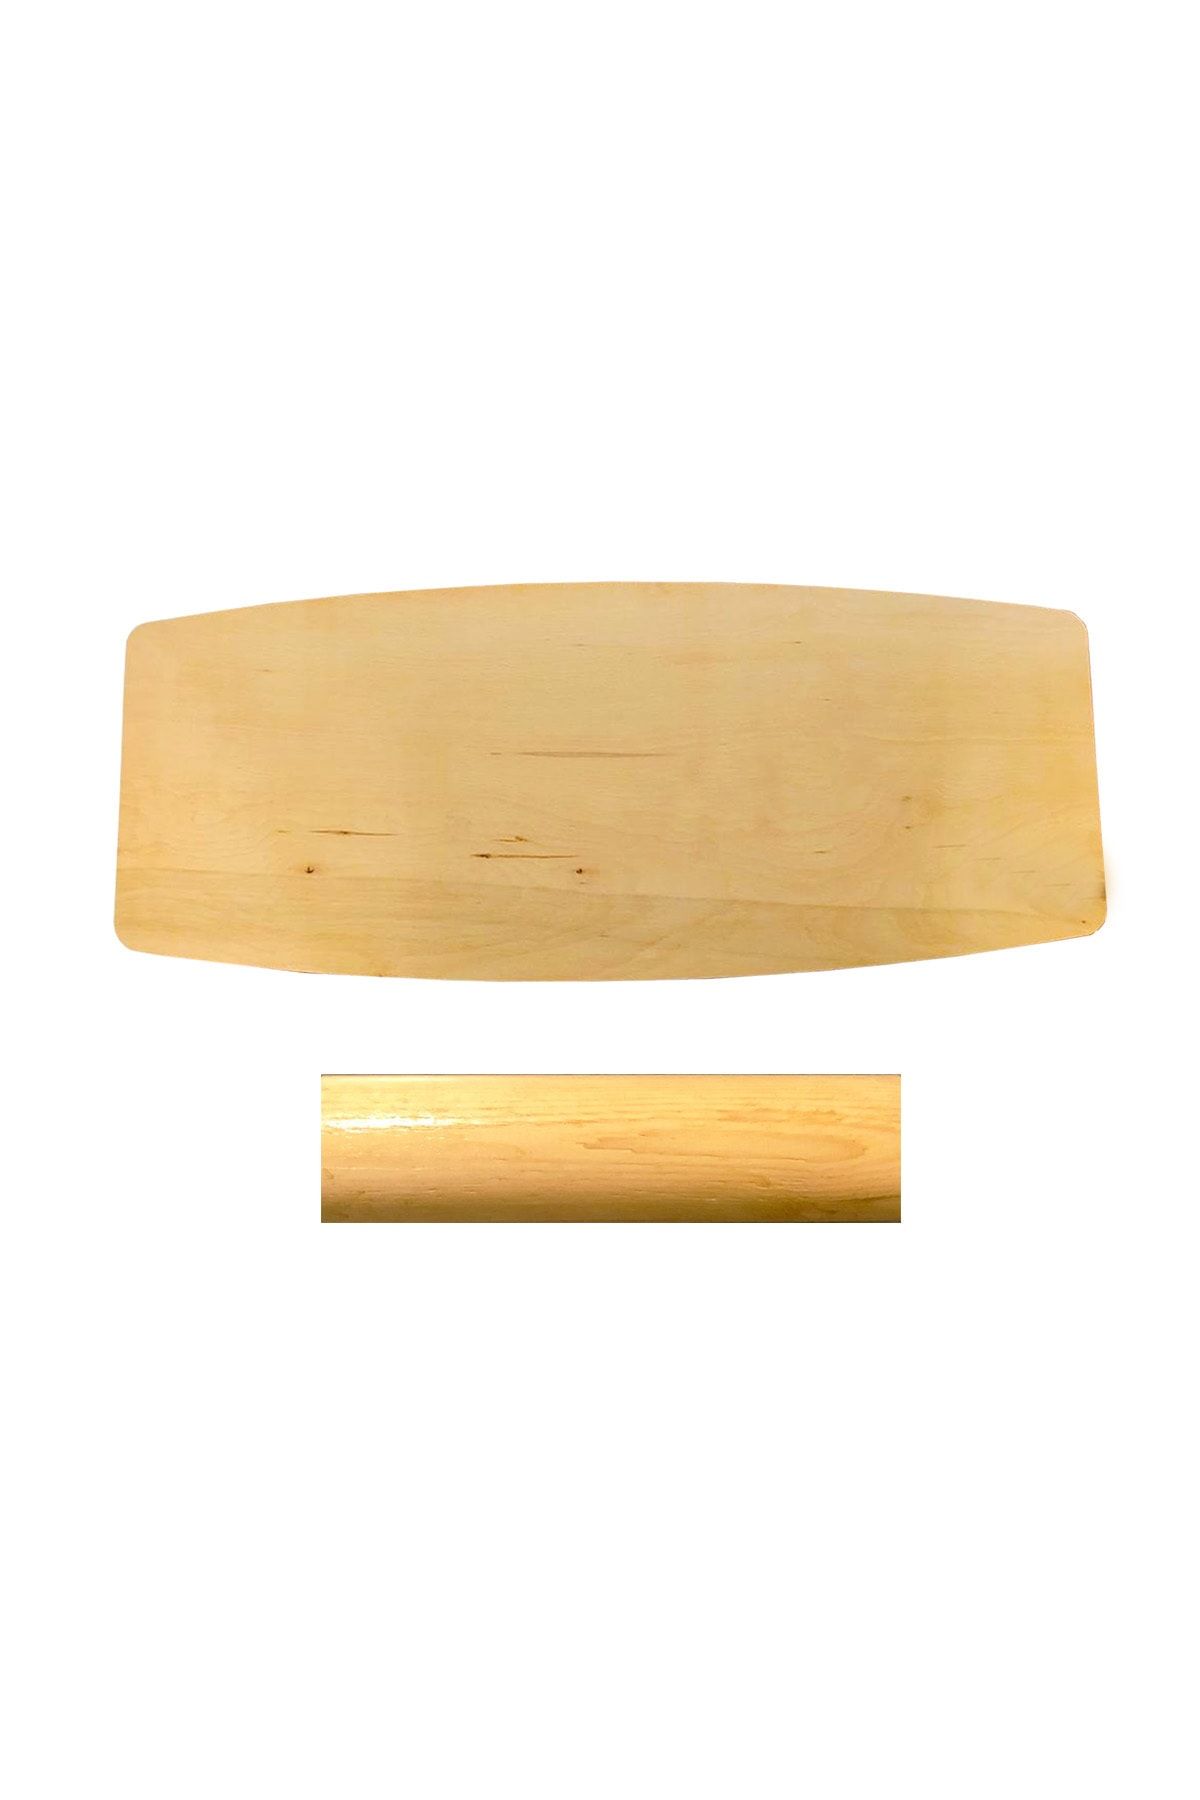 Woodie Denge Tahtası Doğal-balance Board 70x29x1.5cm